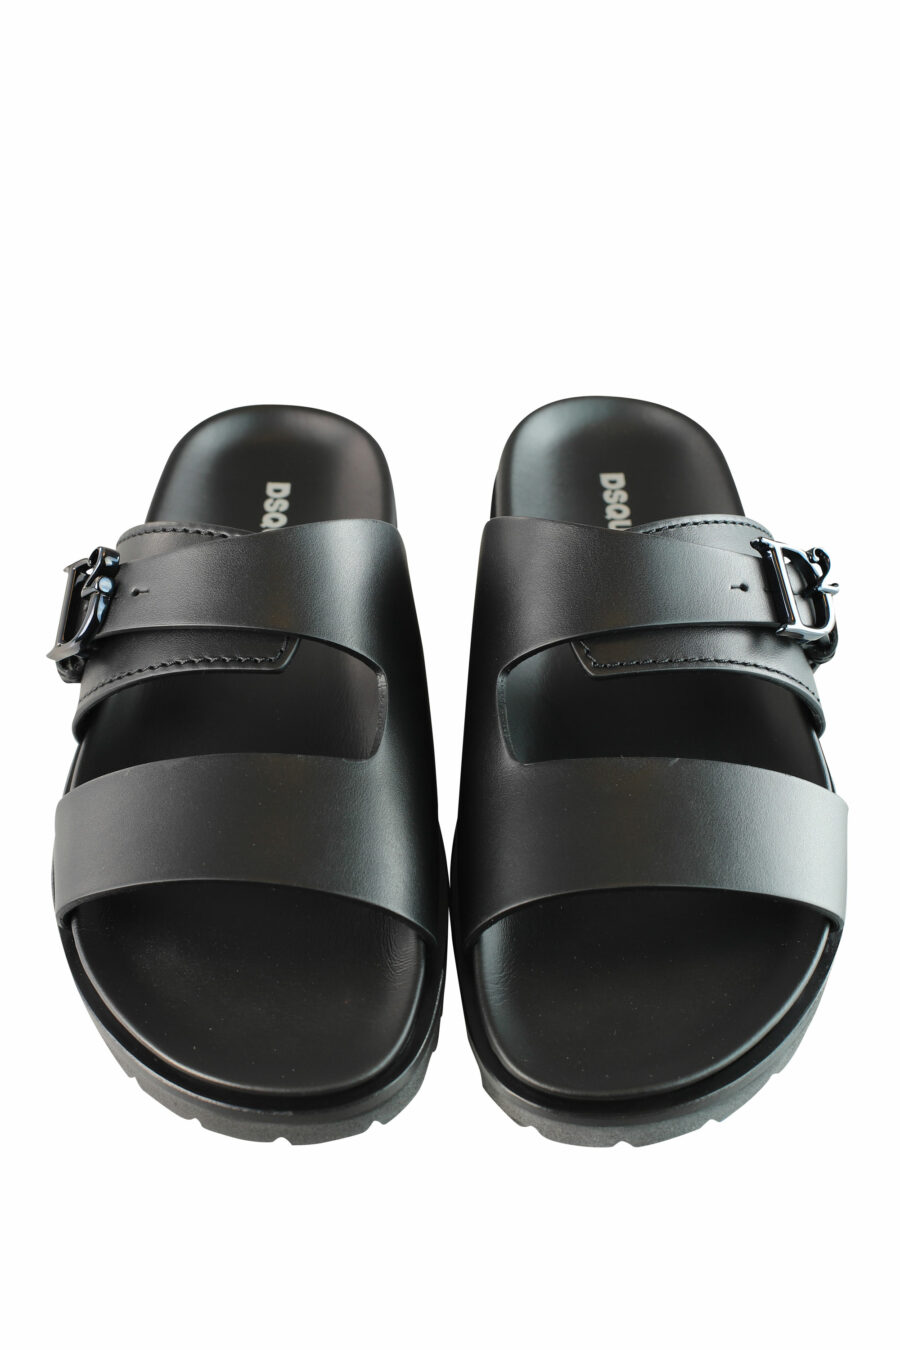 Black sandals with monochrome metal "D2" logo - IMG 1290